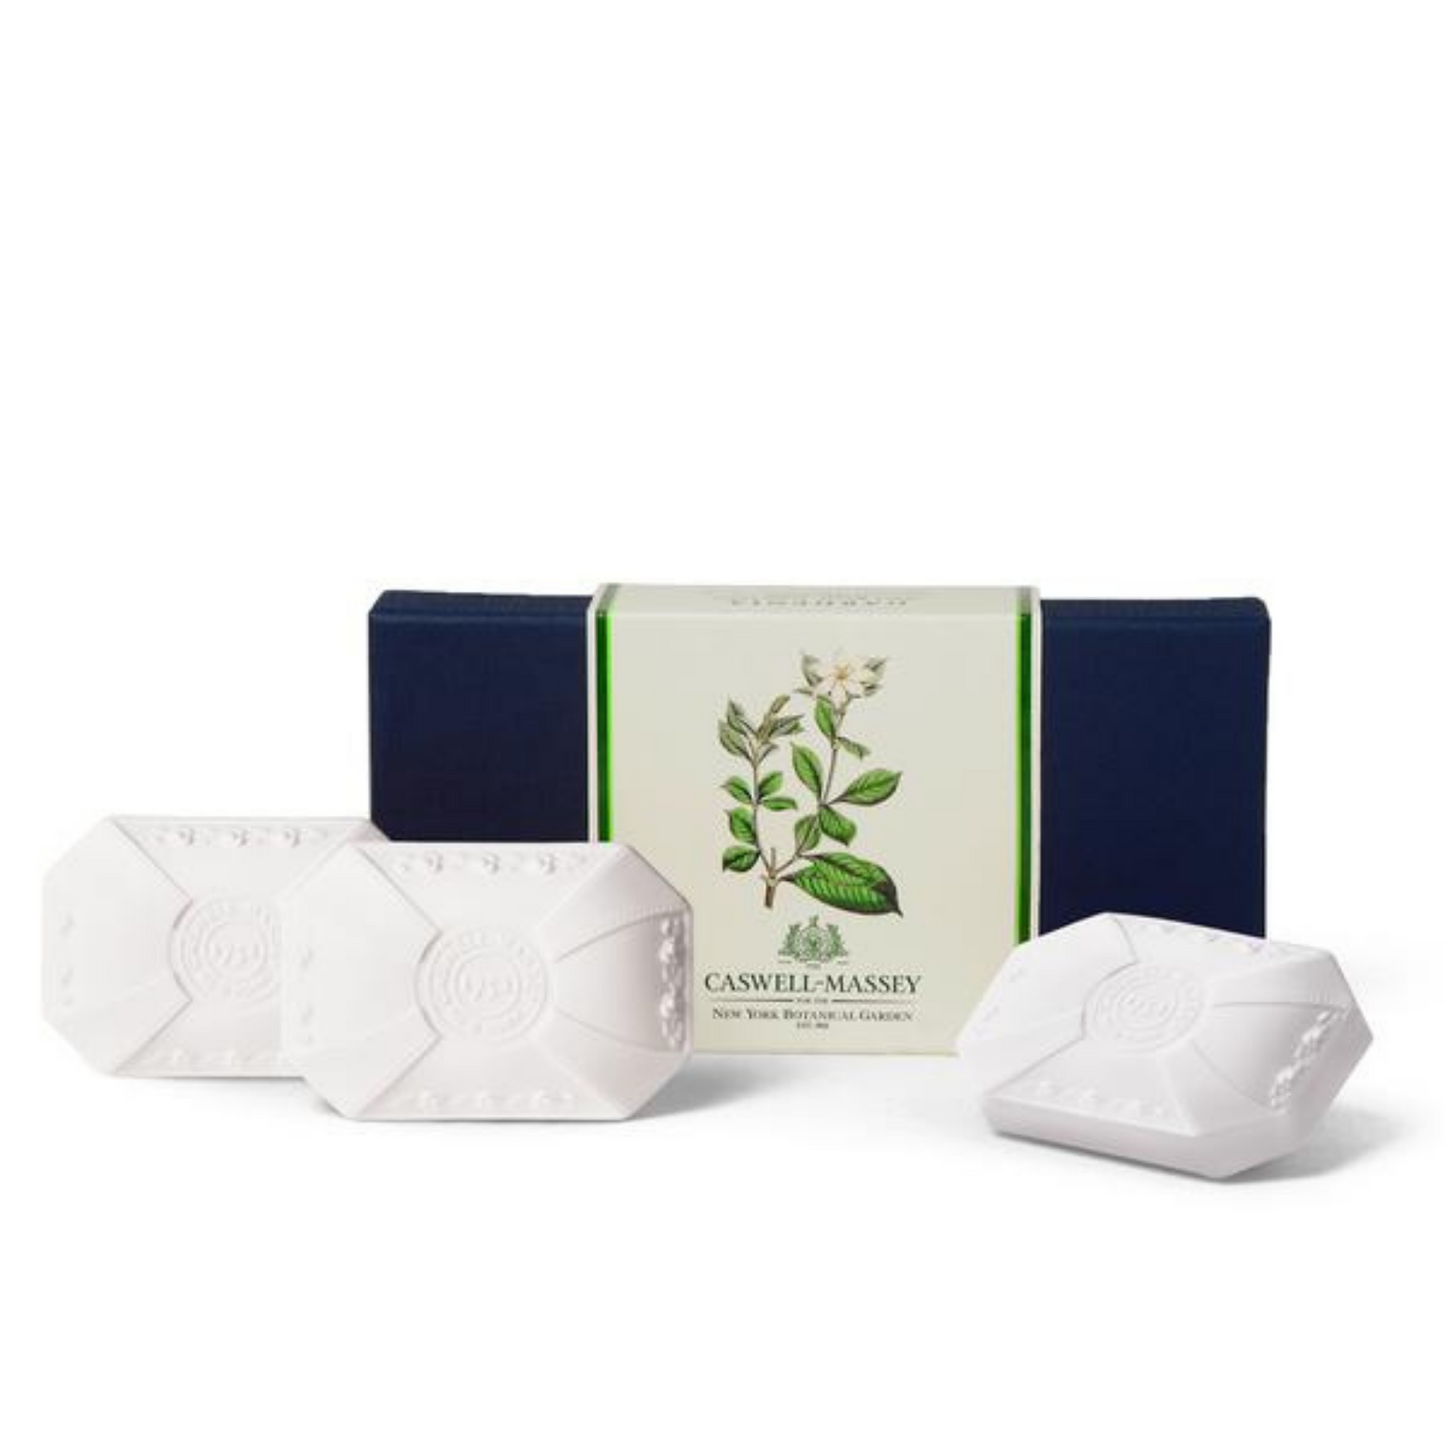 Primary image of NYBG Gardenia Three Bar Soap Set